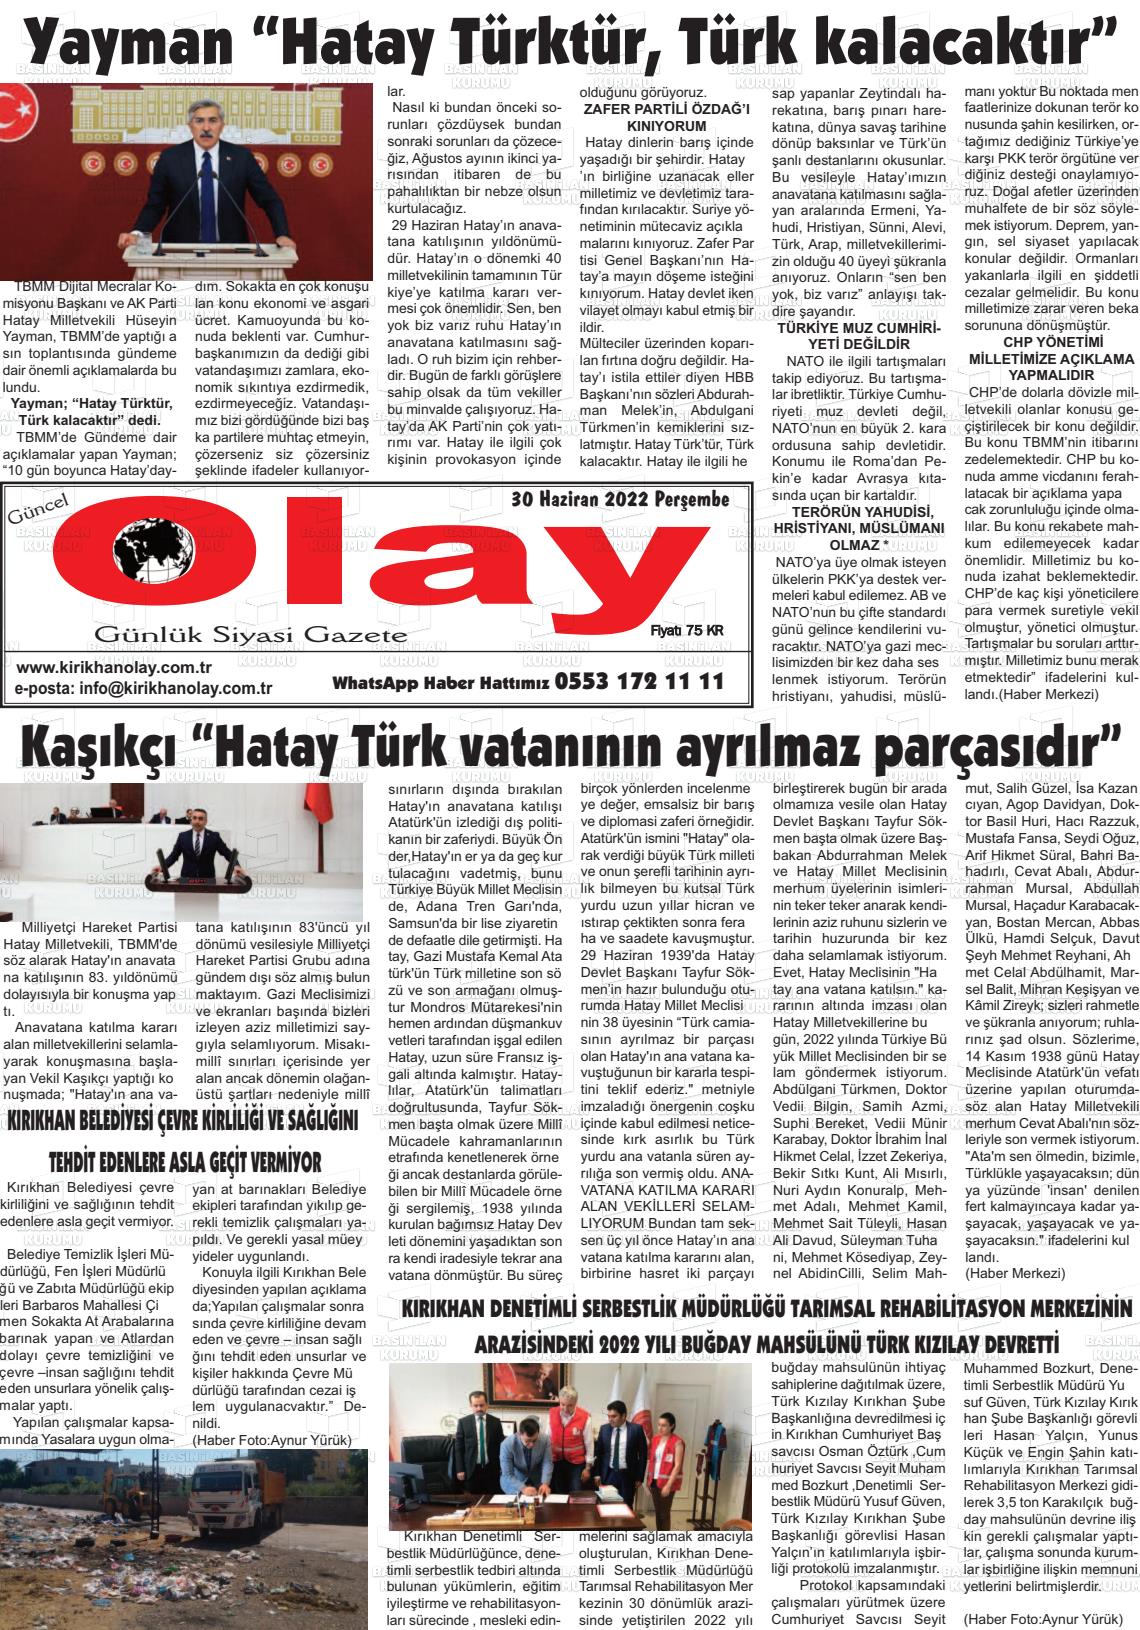 02 Temmuz 2022 Kırıkhan Olay Gazete Manşeti